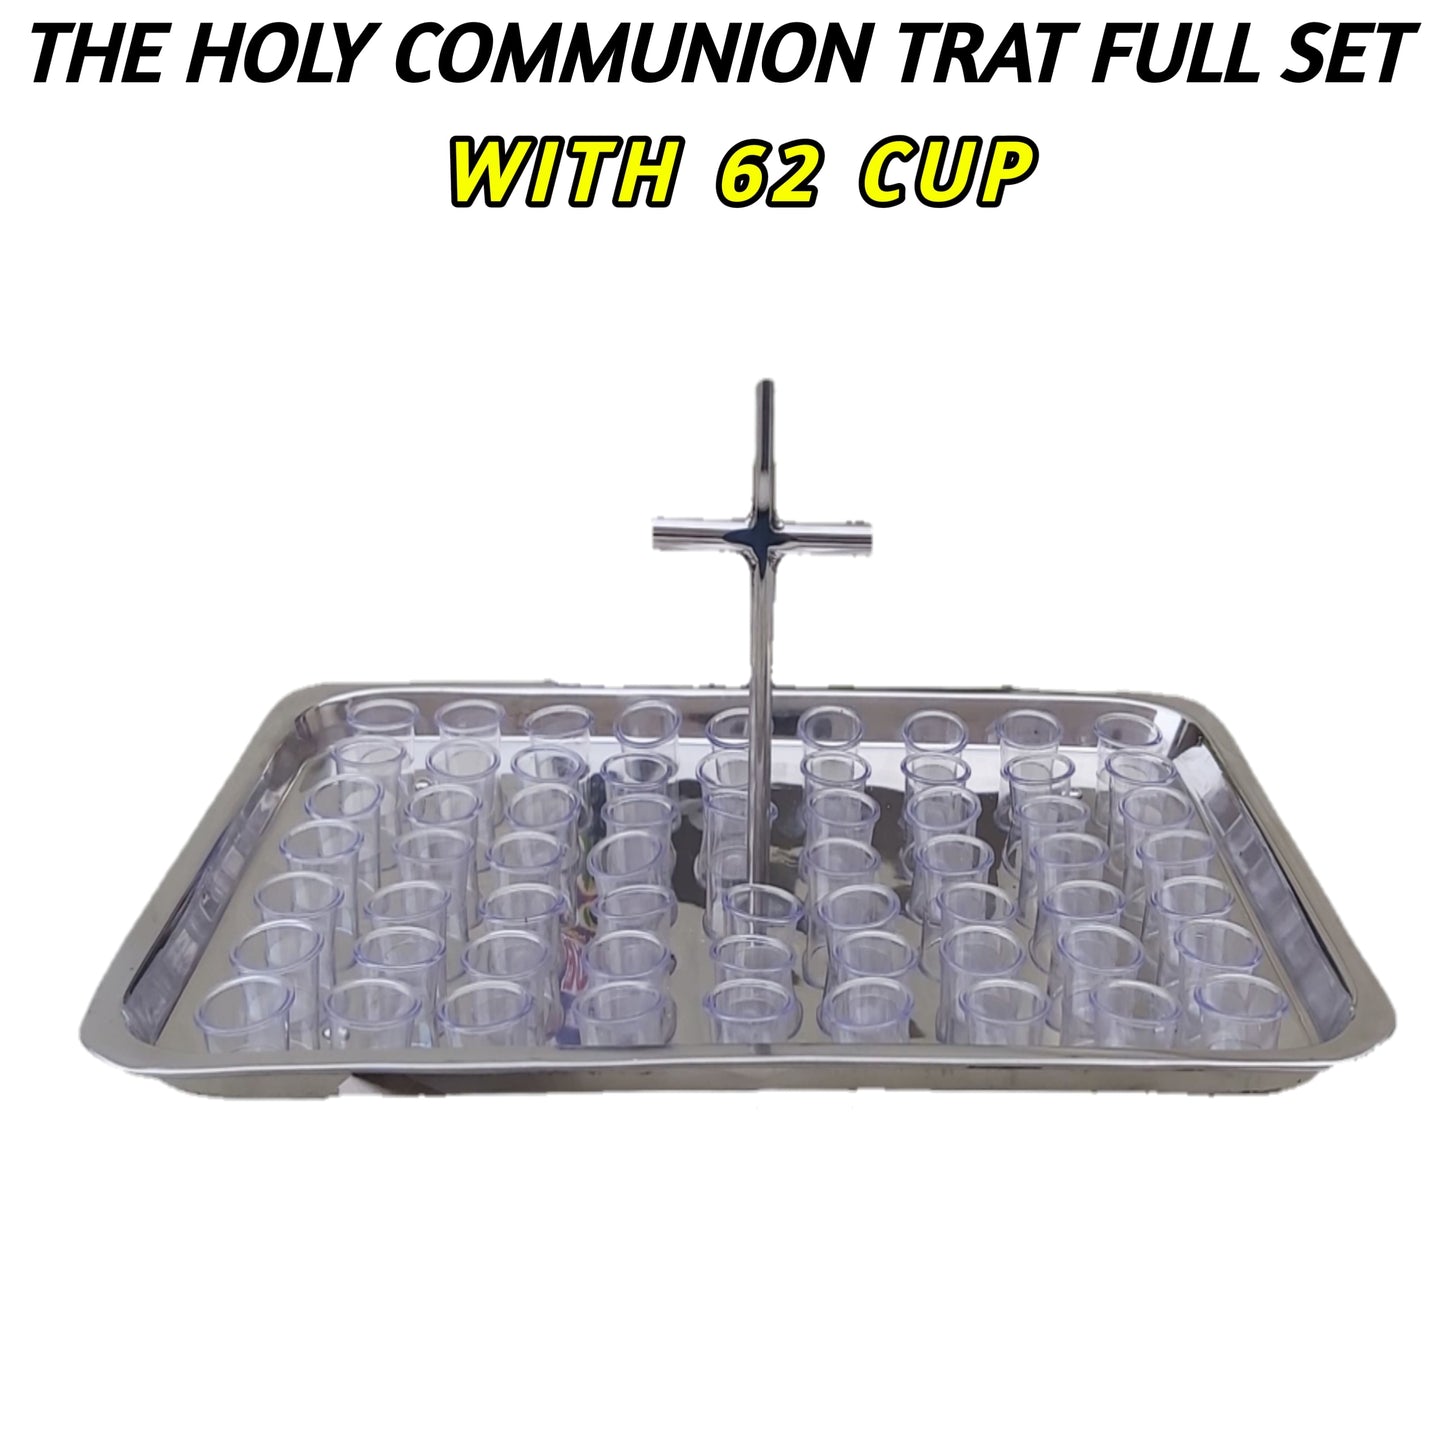 The Holy Communion Tray Full Set